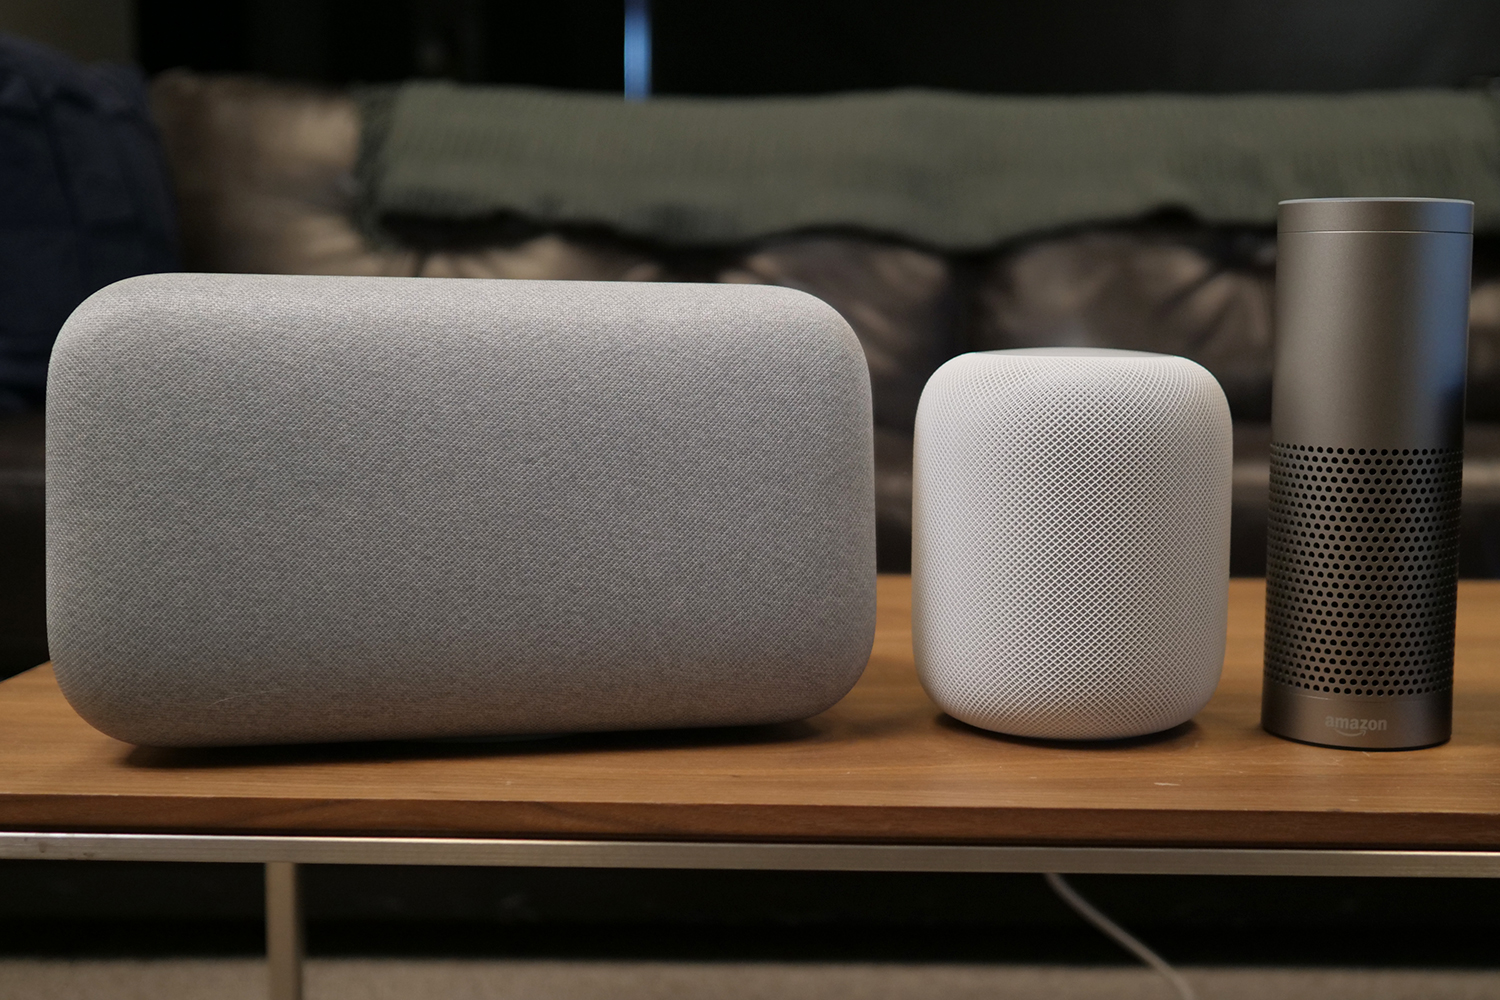 Echo vs. Google Home vs. Apple HomePod